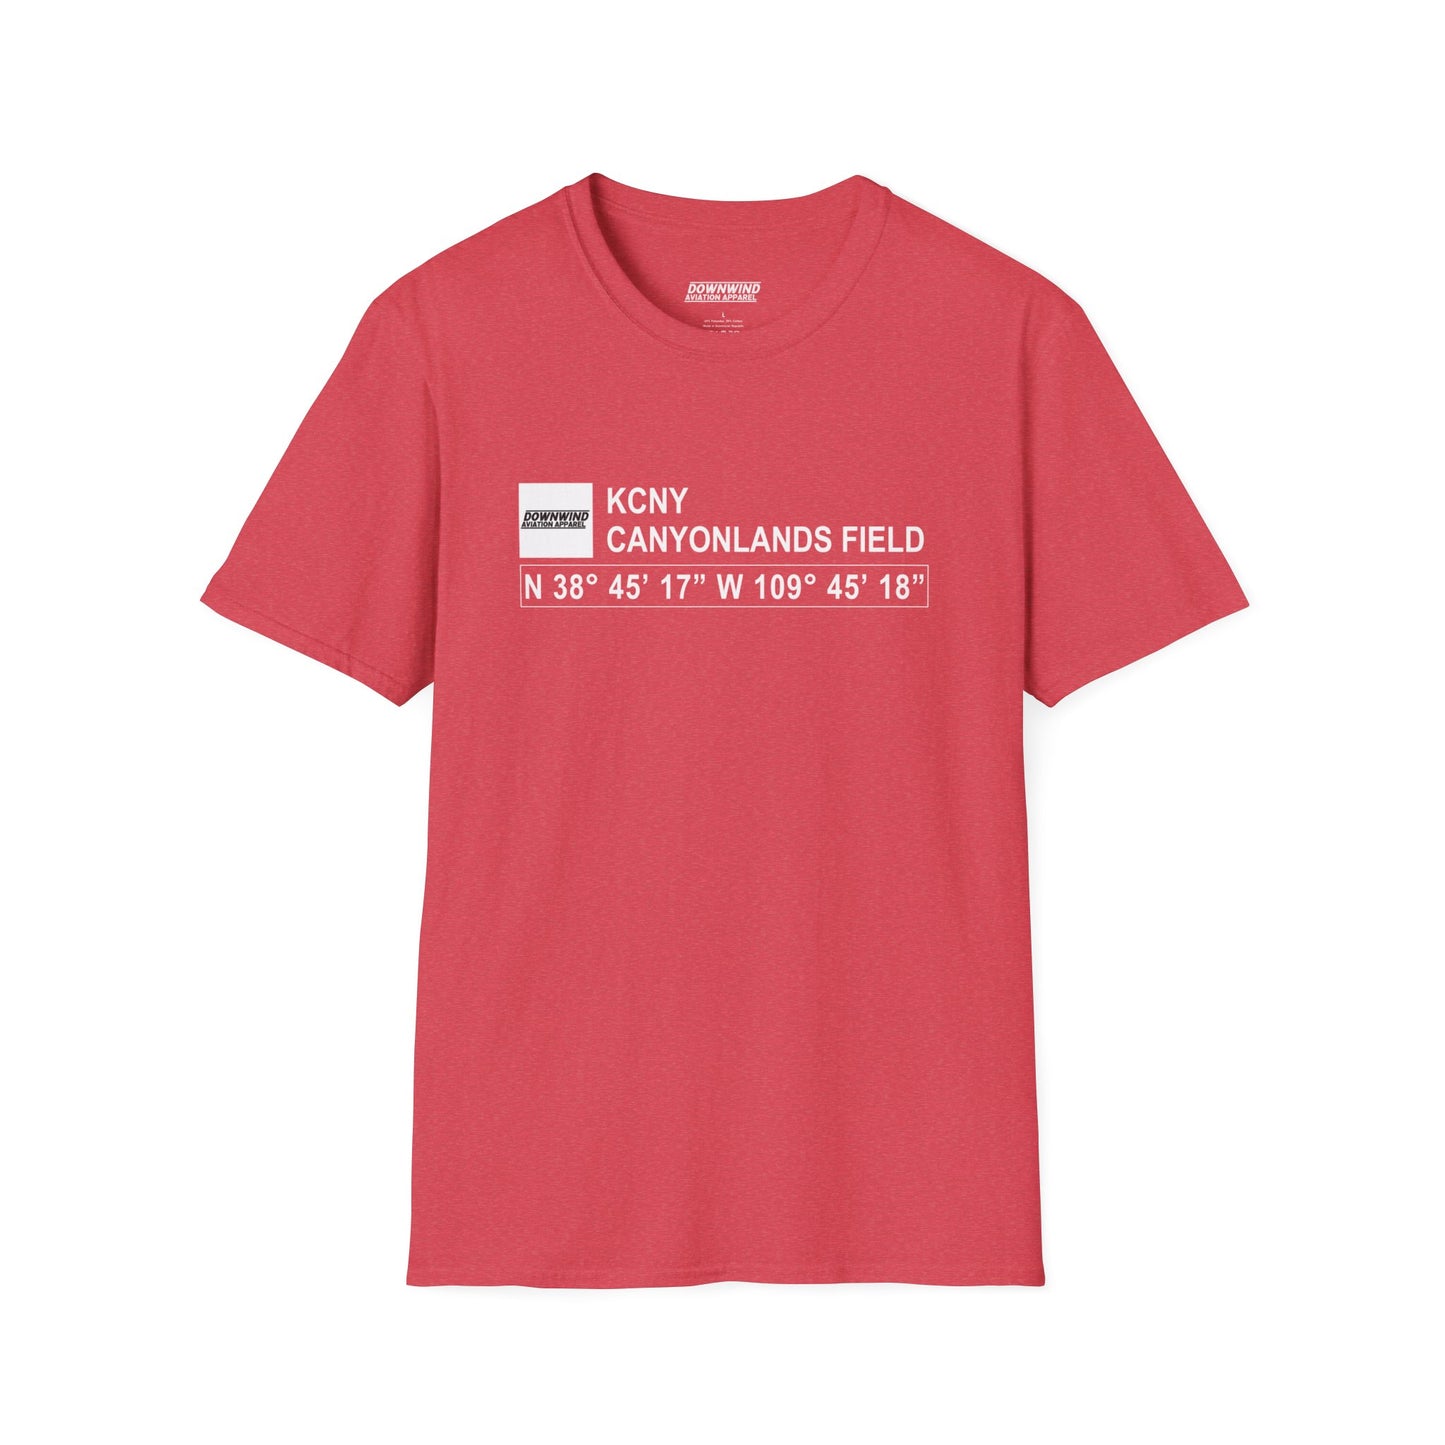 KCNY / Canyonlands Field T-Shirt